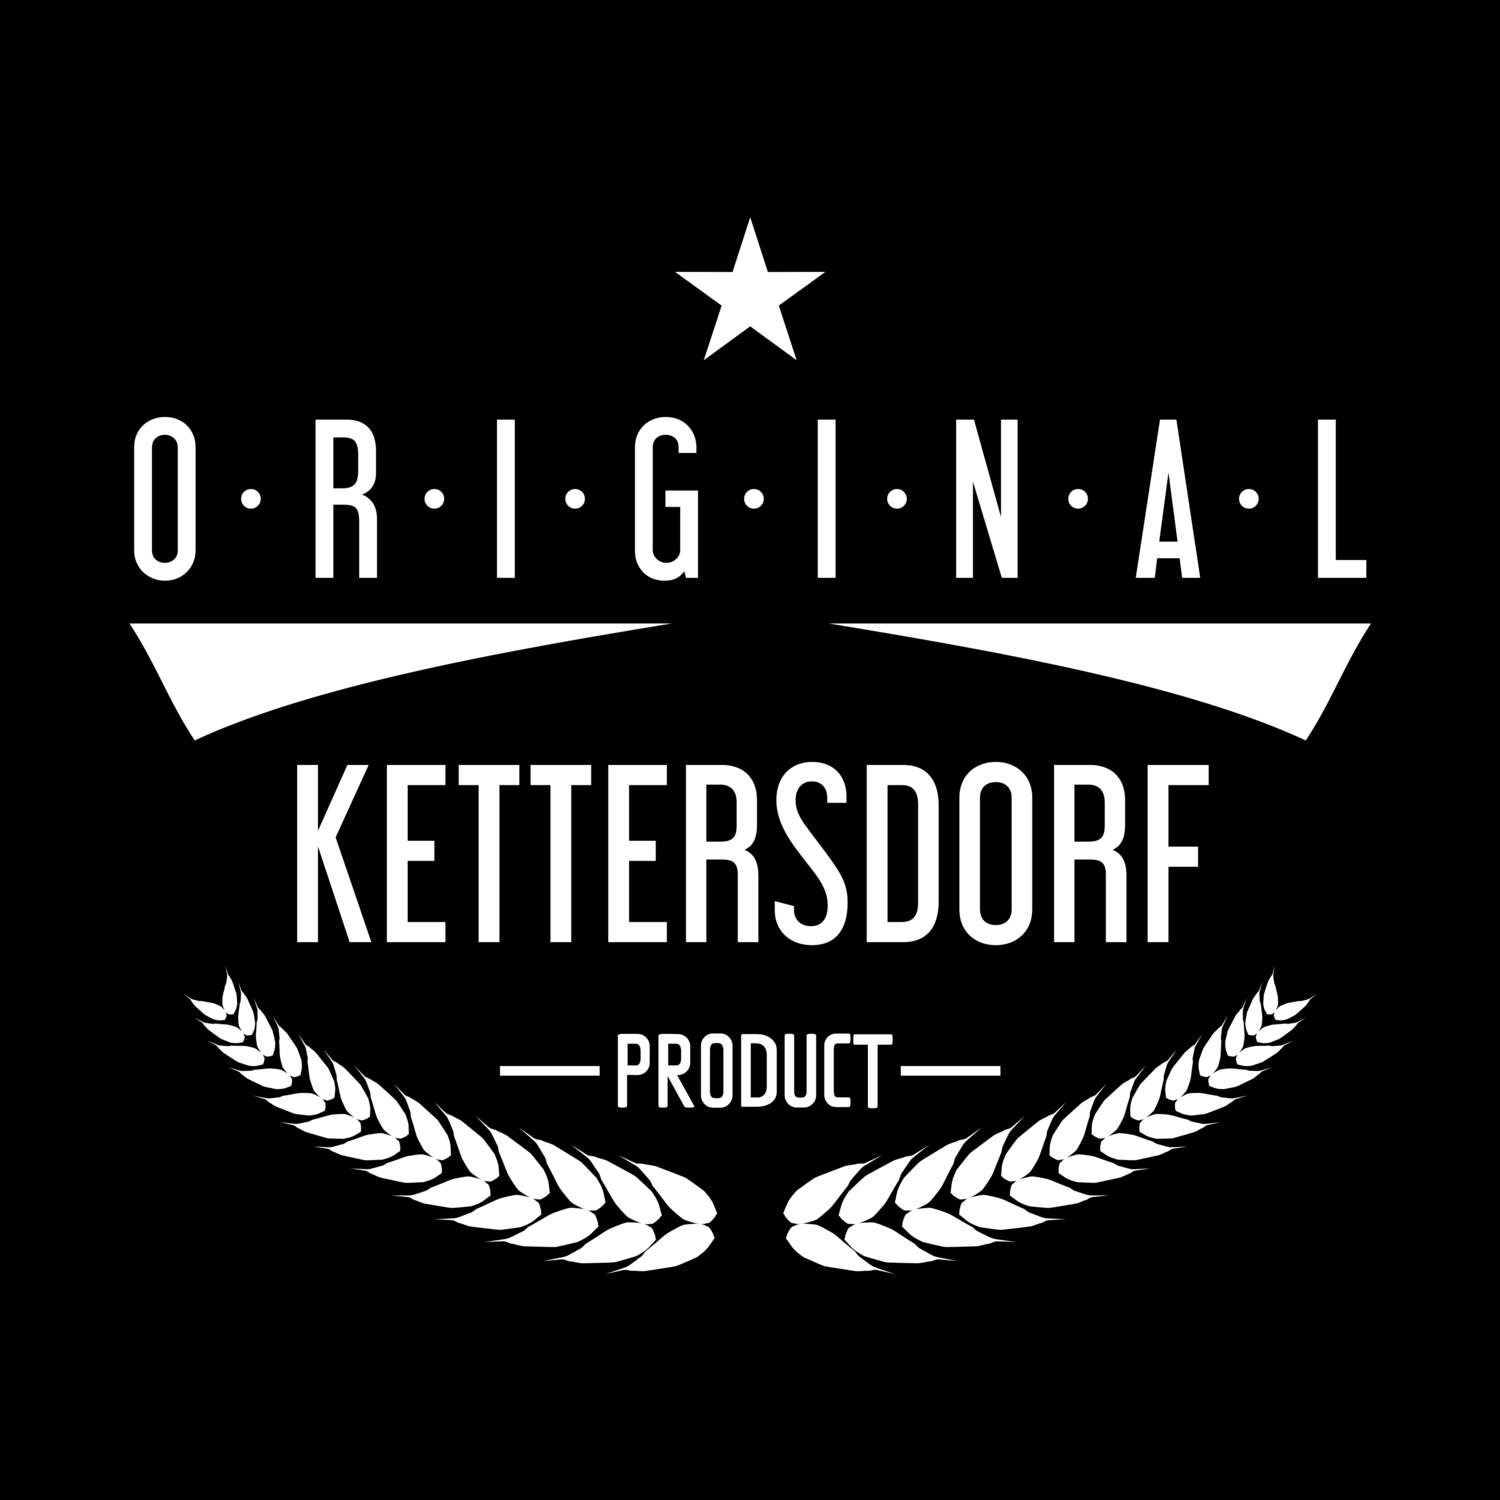 Kettersdorf T-Shirt »Original Product«